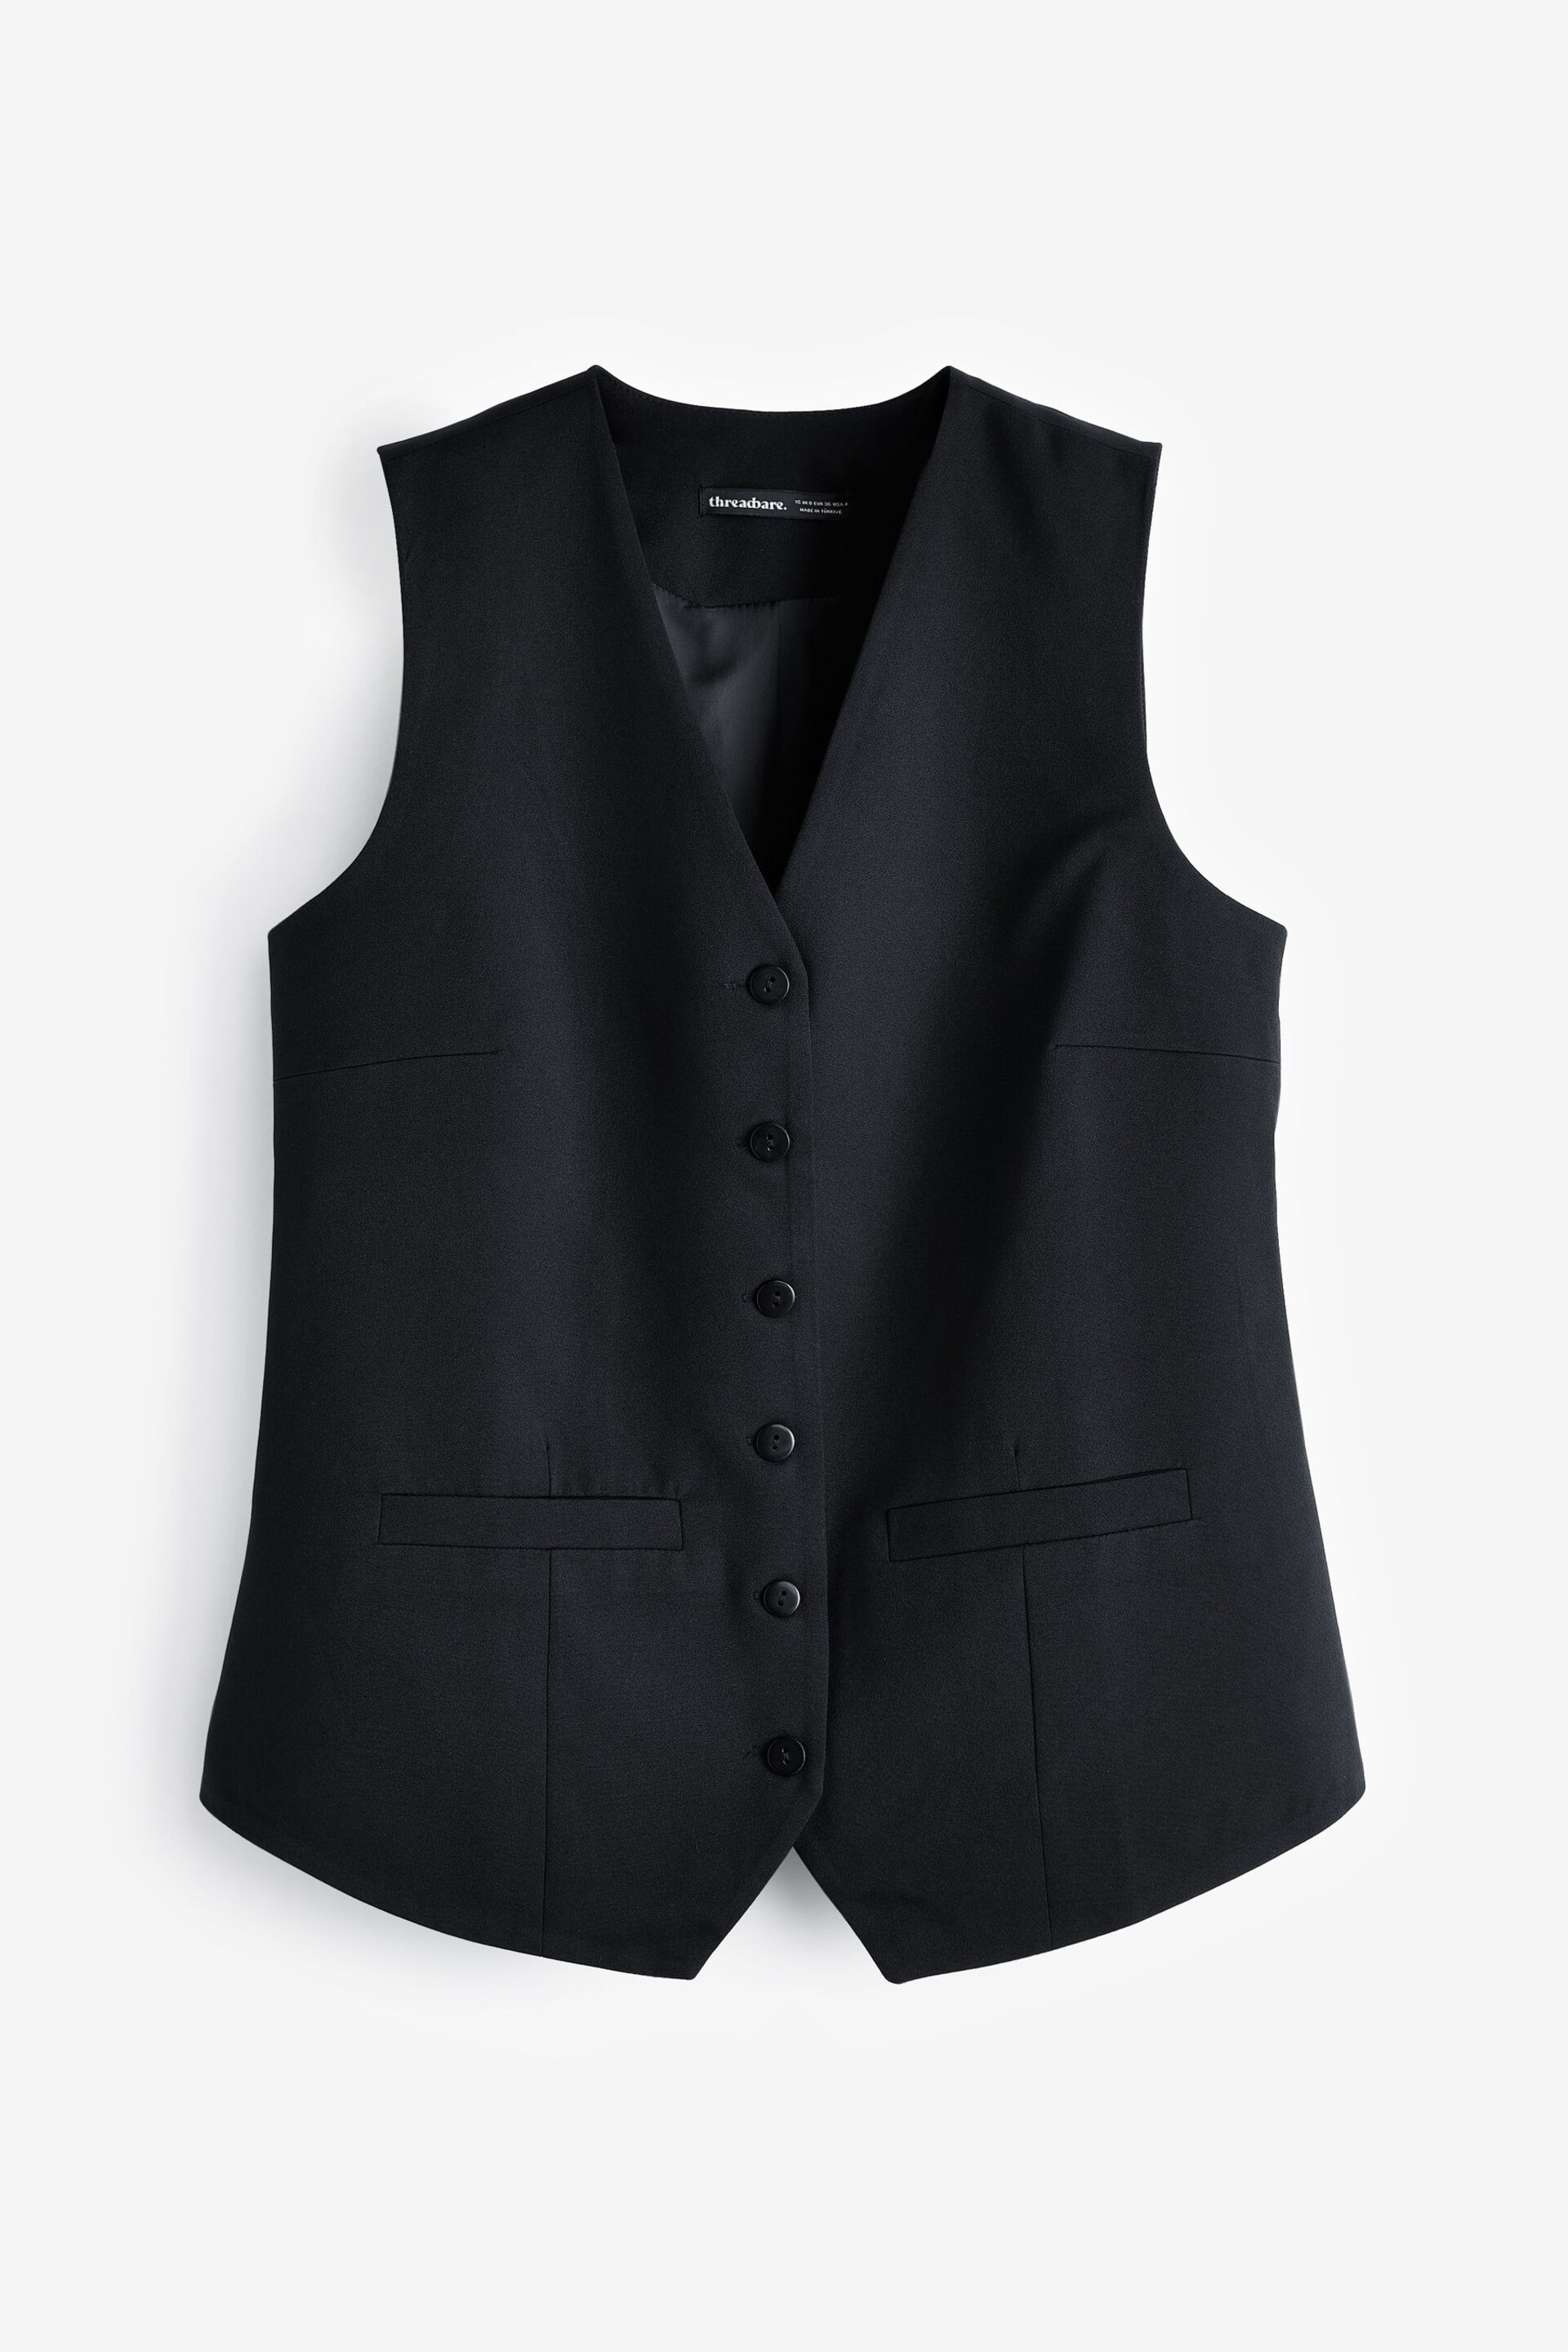 Threadbare Black Longline Fitted Tailored Waistcoat - Image 5 of 5